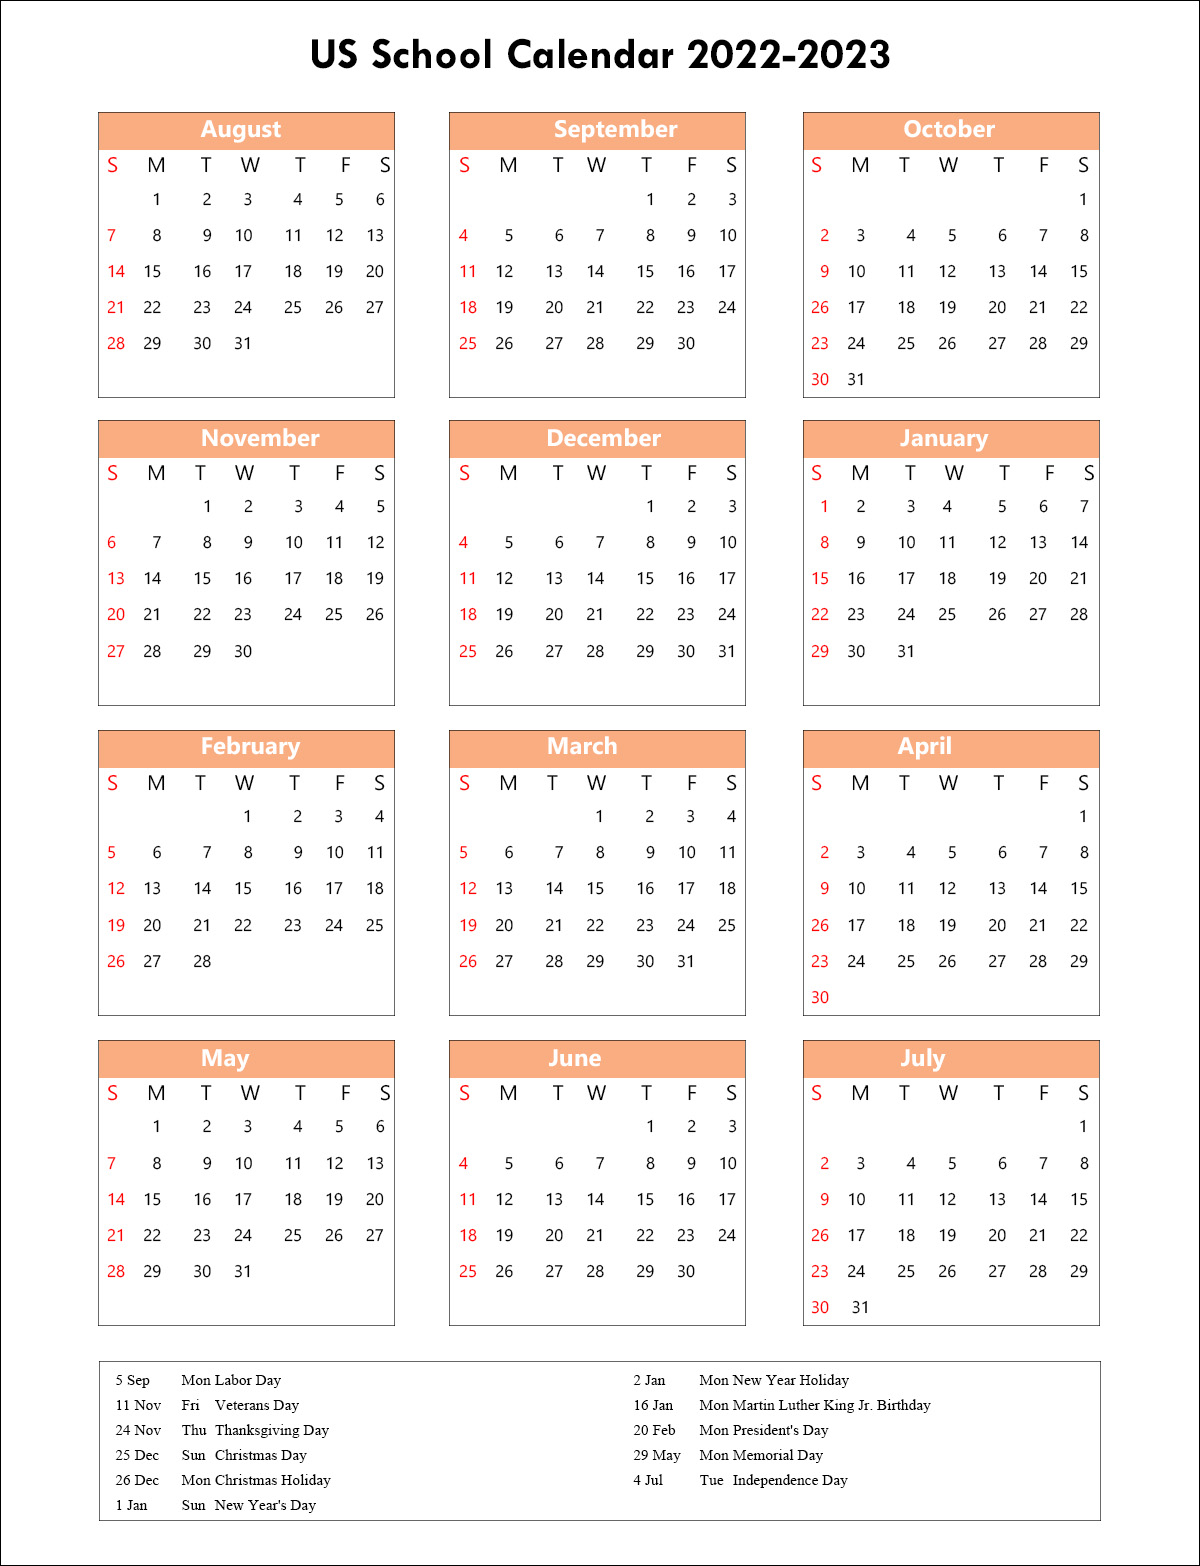 US School Holidays Calendar 2022